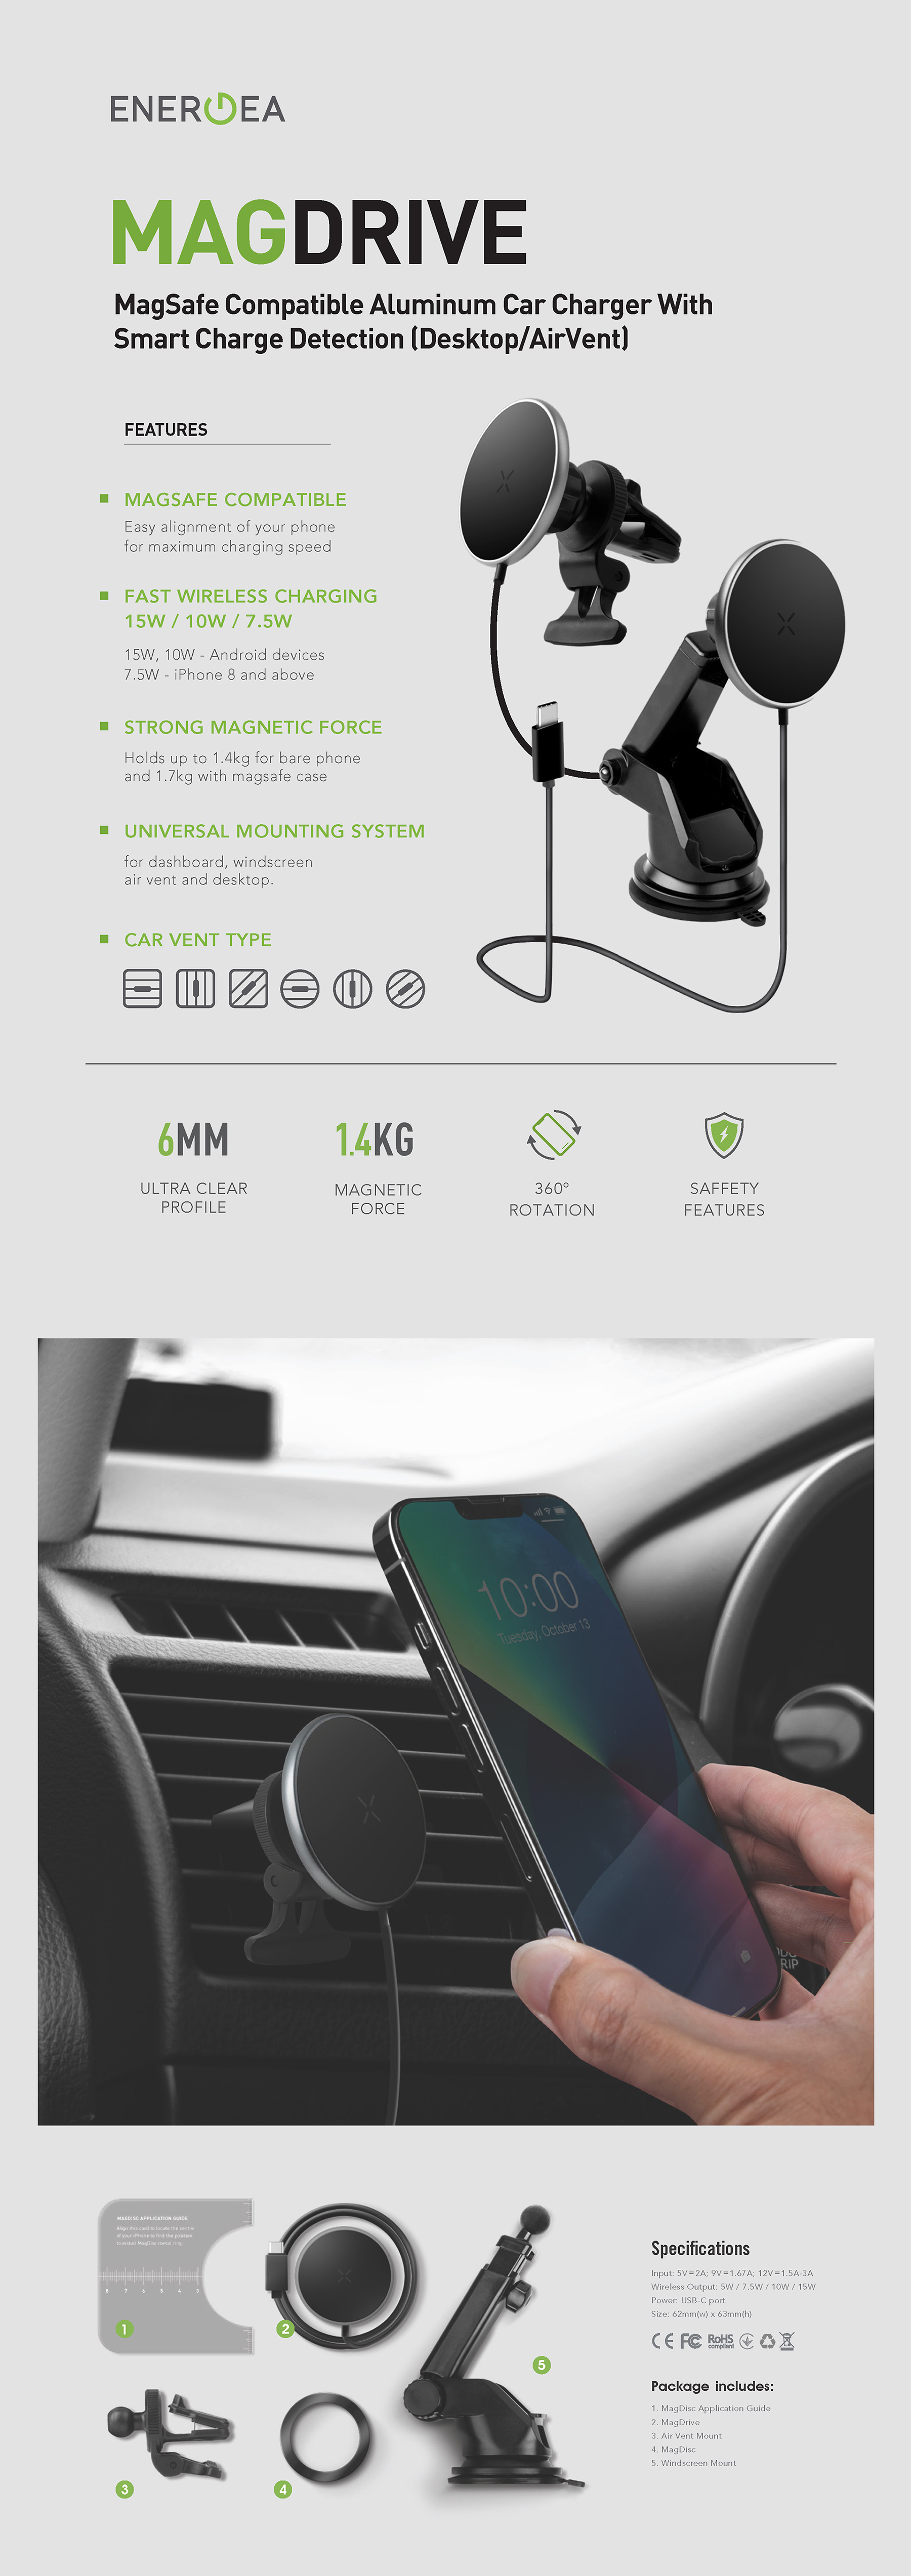 Energea Magdrive Aluminium Car Charger (Desktop / Air Vent) - Challenger  Singapore